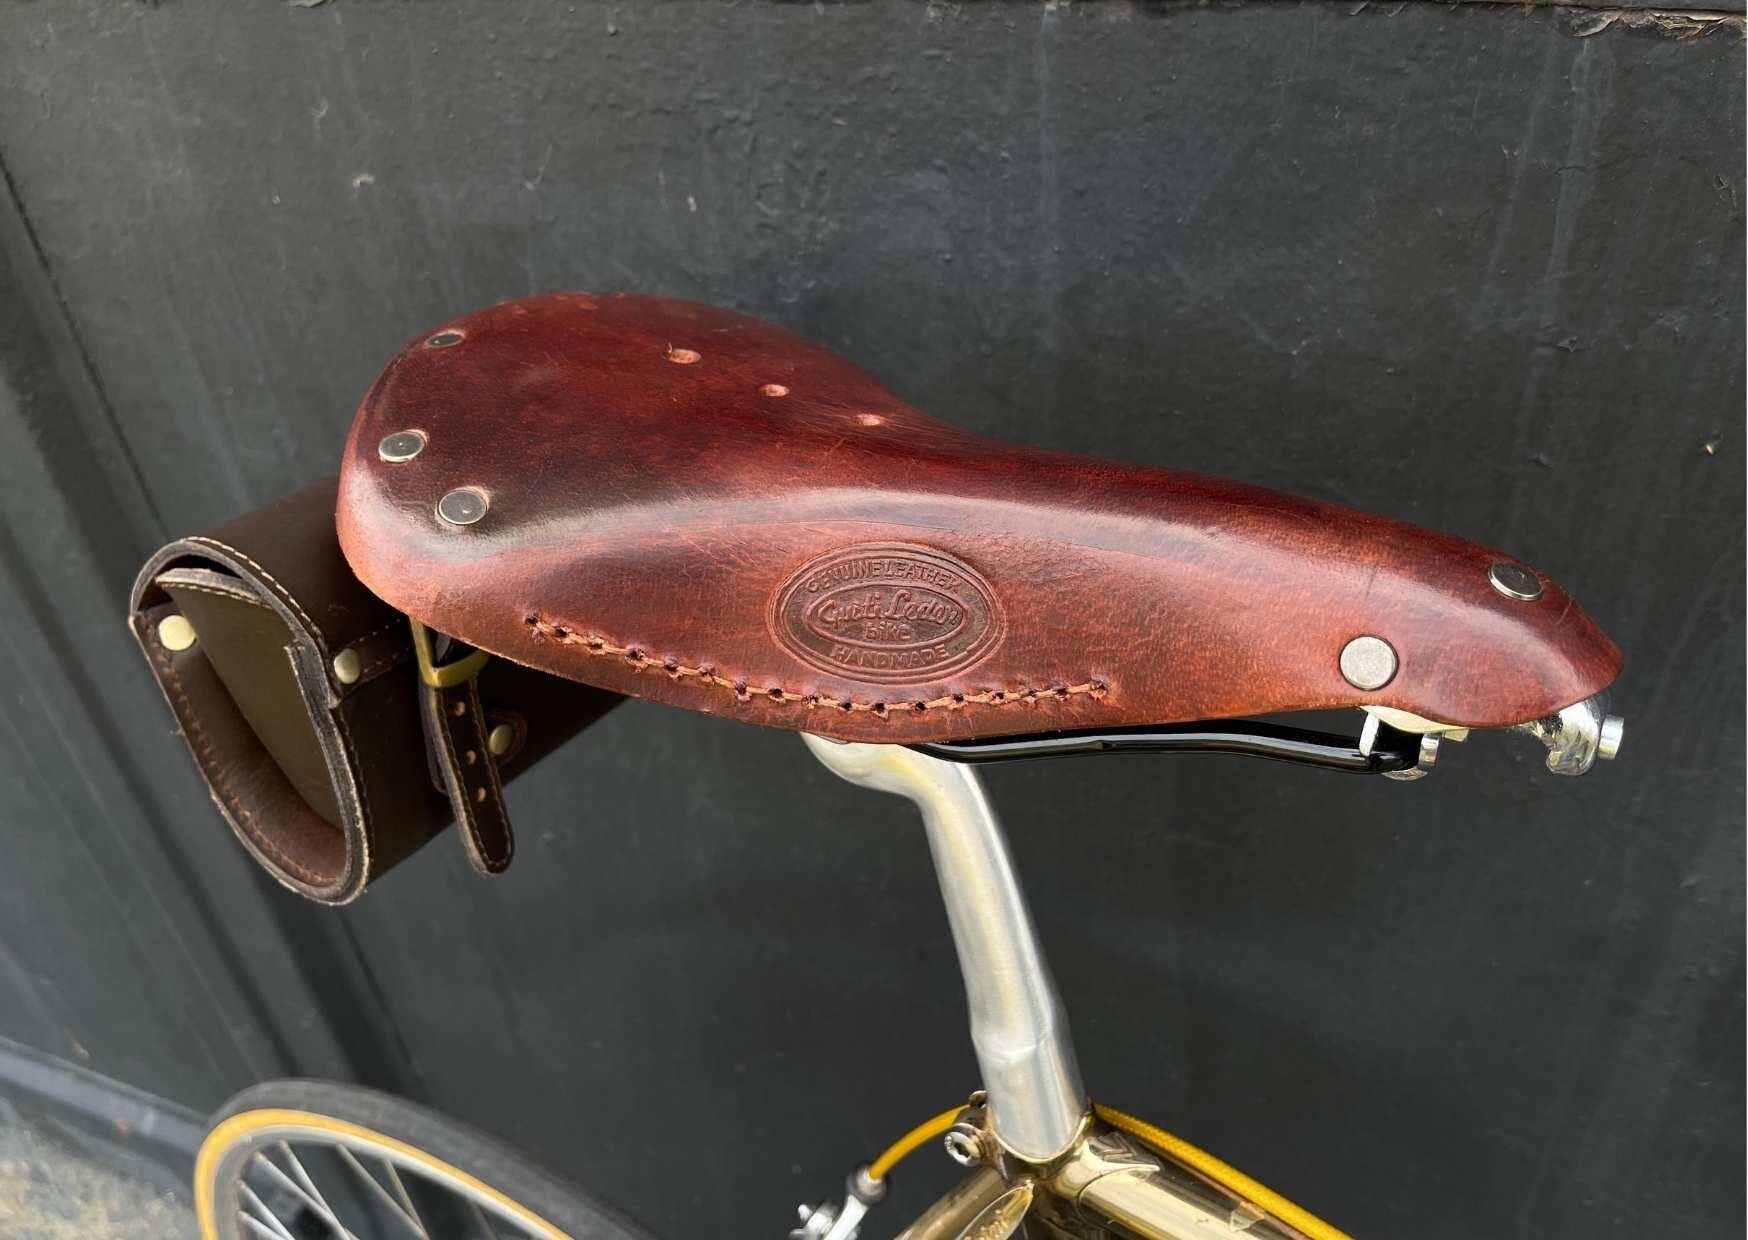 Echtleder Touren City Bike Leder Sattel Fahrradsattel Vintage Braun Chrome